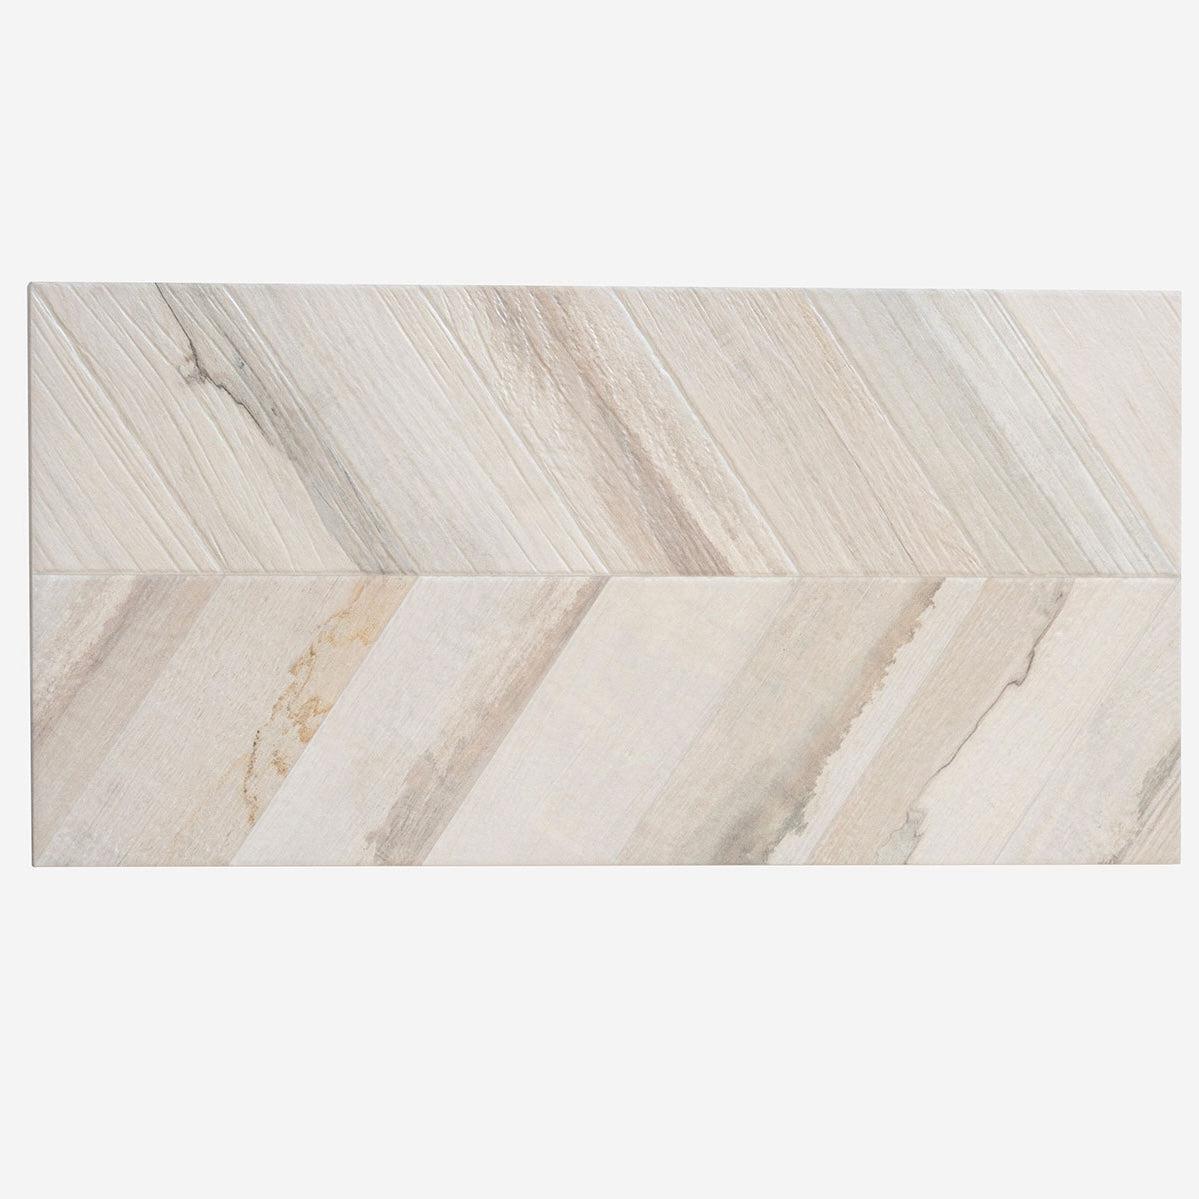 Spiga Olson Blanco Wood-Look Chevron Porcelain Tile Sample